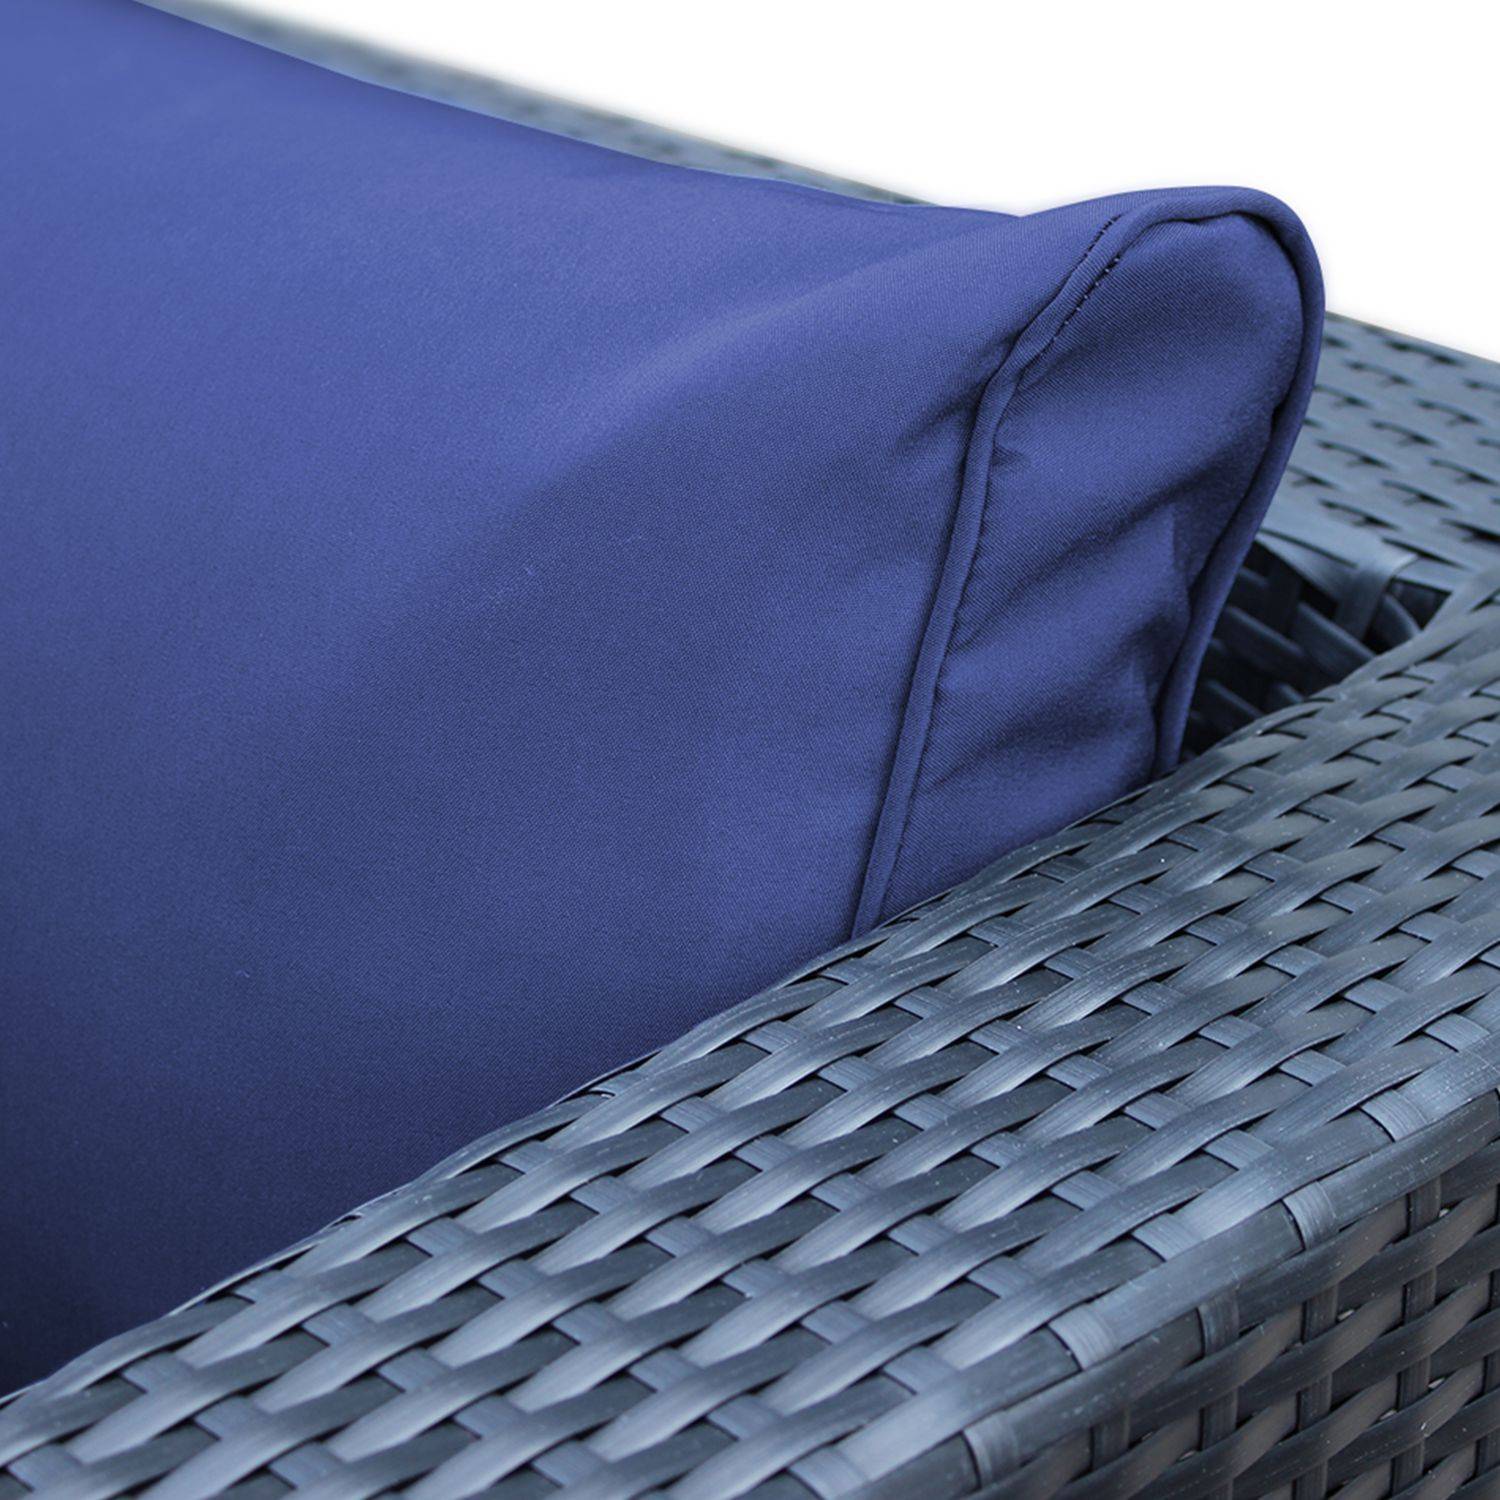 Blue cushion cover set for Napoli garden set - complete set Photo7